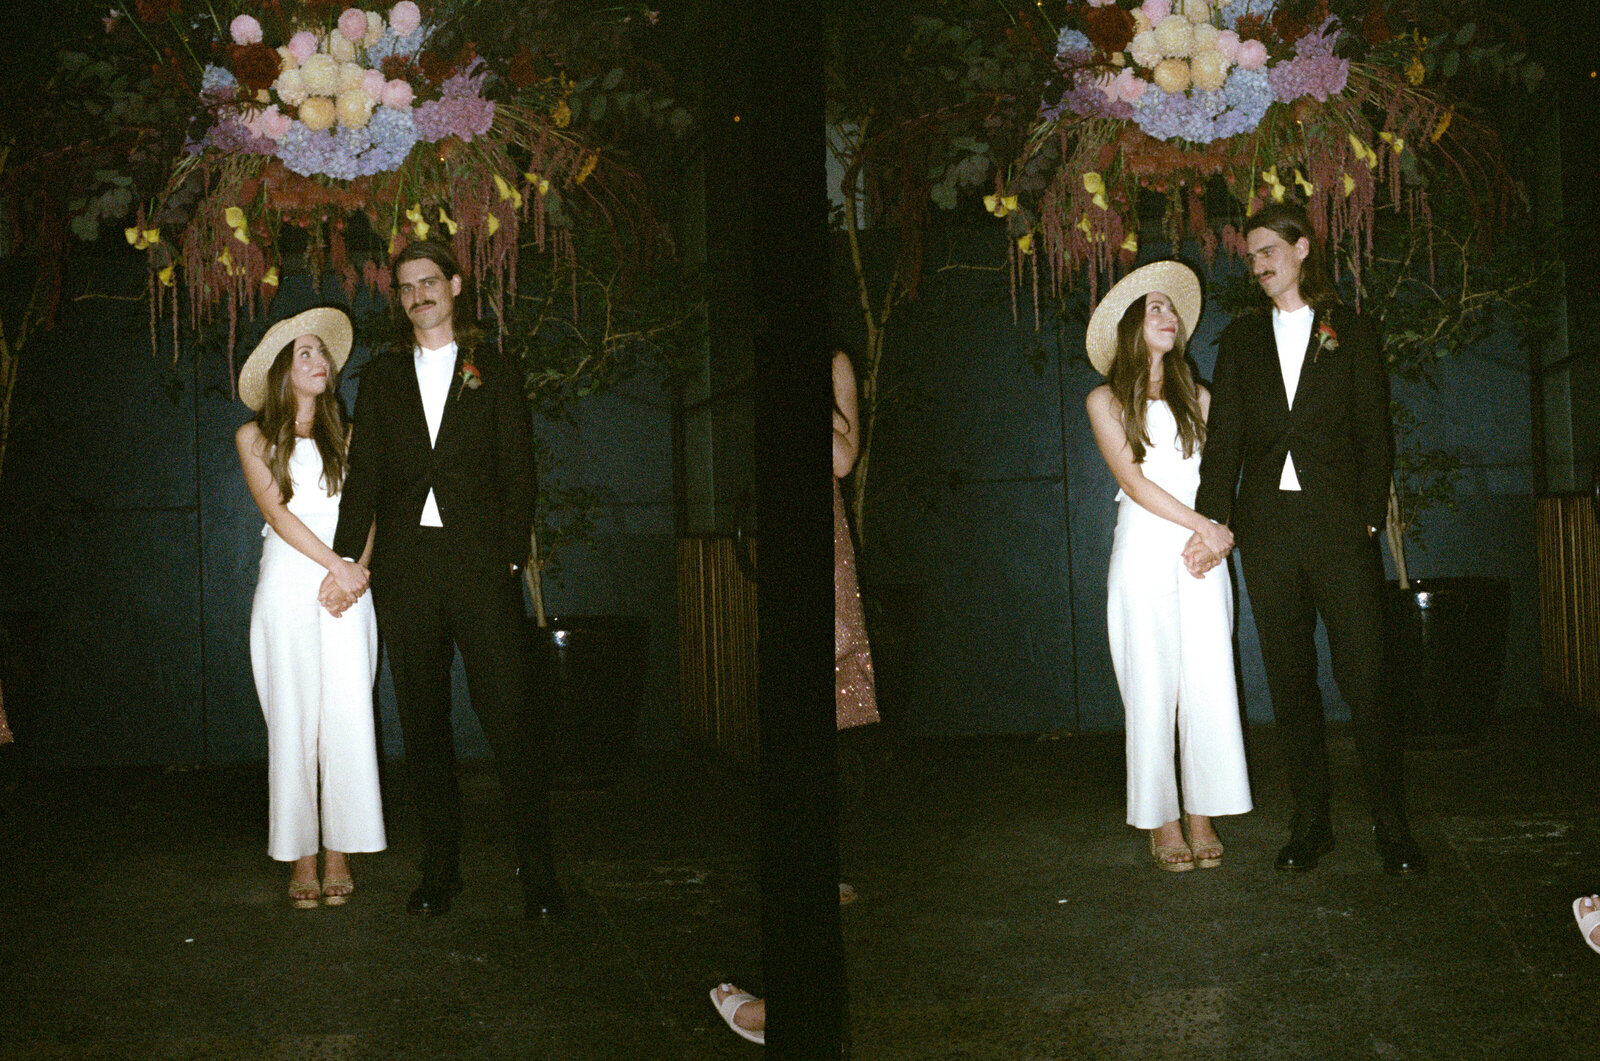 Wedding-diptych-35mm-Film-Briars-Atlas-4634